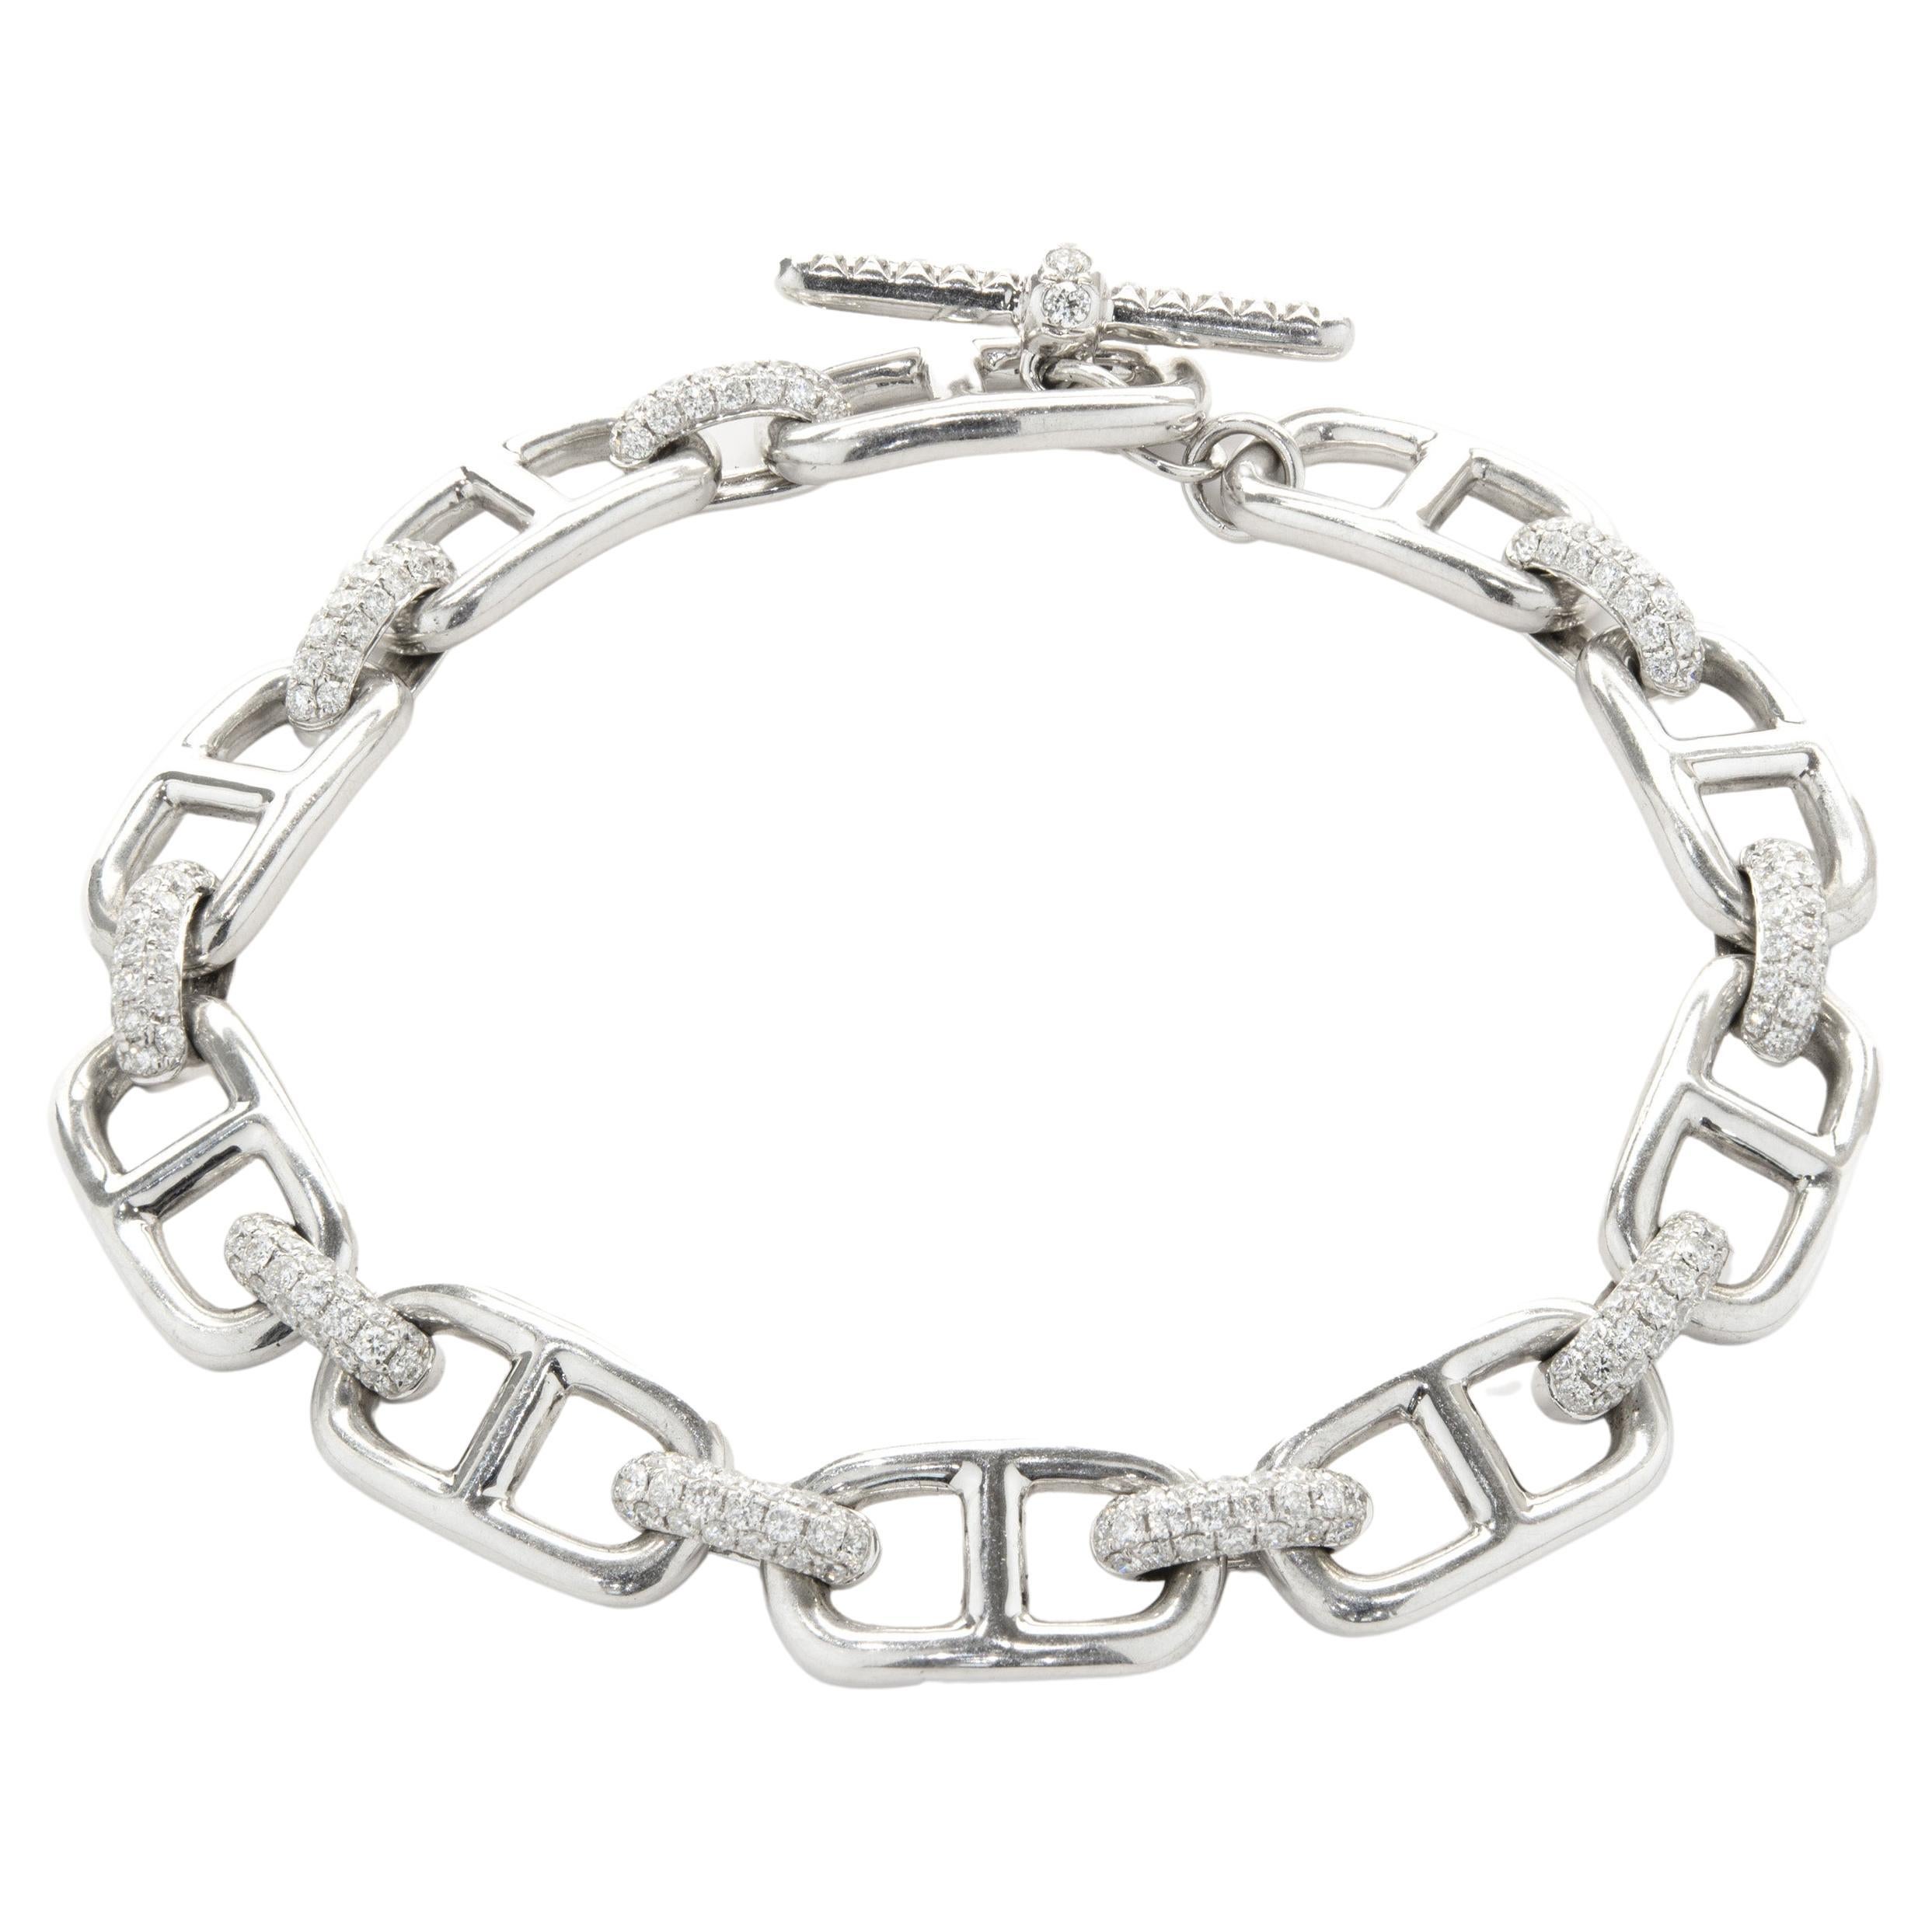 18 Karat White Gold Mariner Link Bracelet with Pave Diamond Center Bars